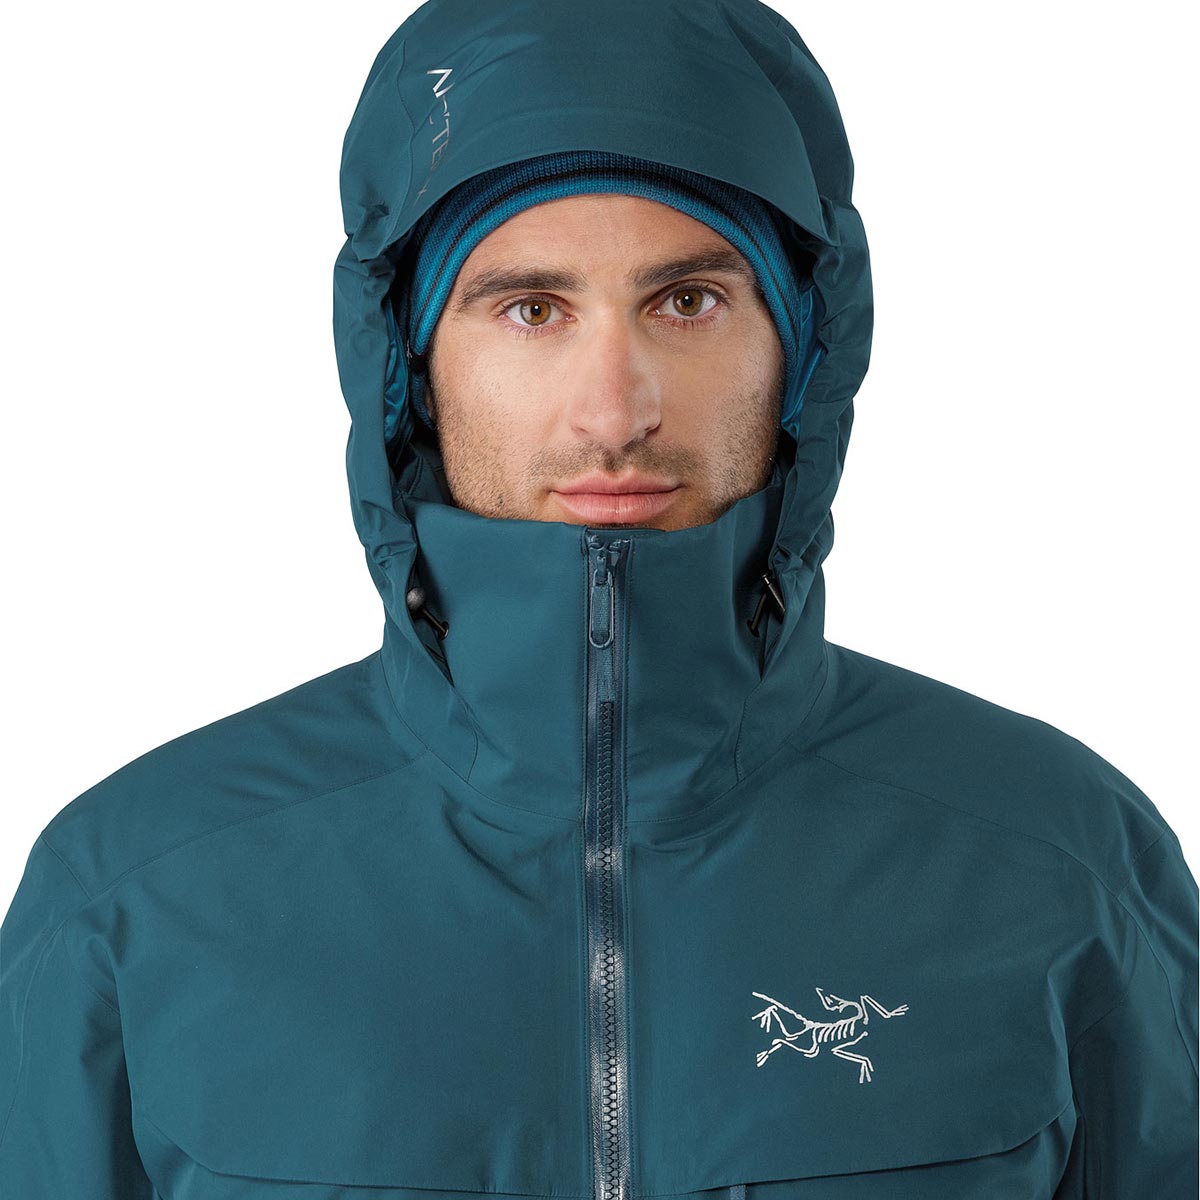 Arc'teryx Macai Jacket, men's, discontinued Fall 2016 colors (free ...